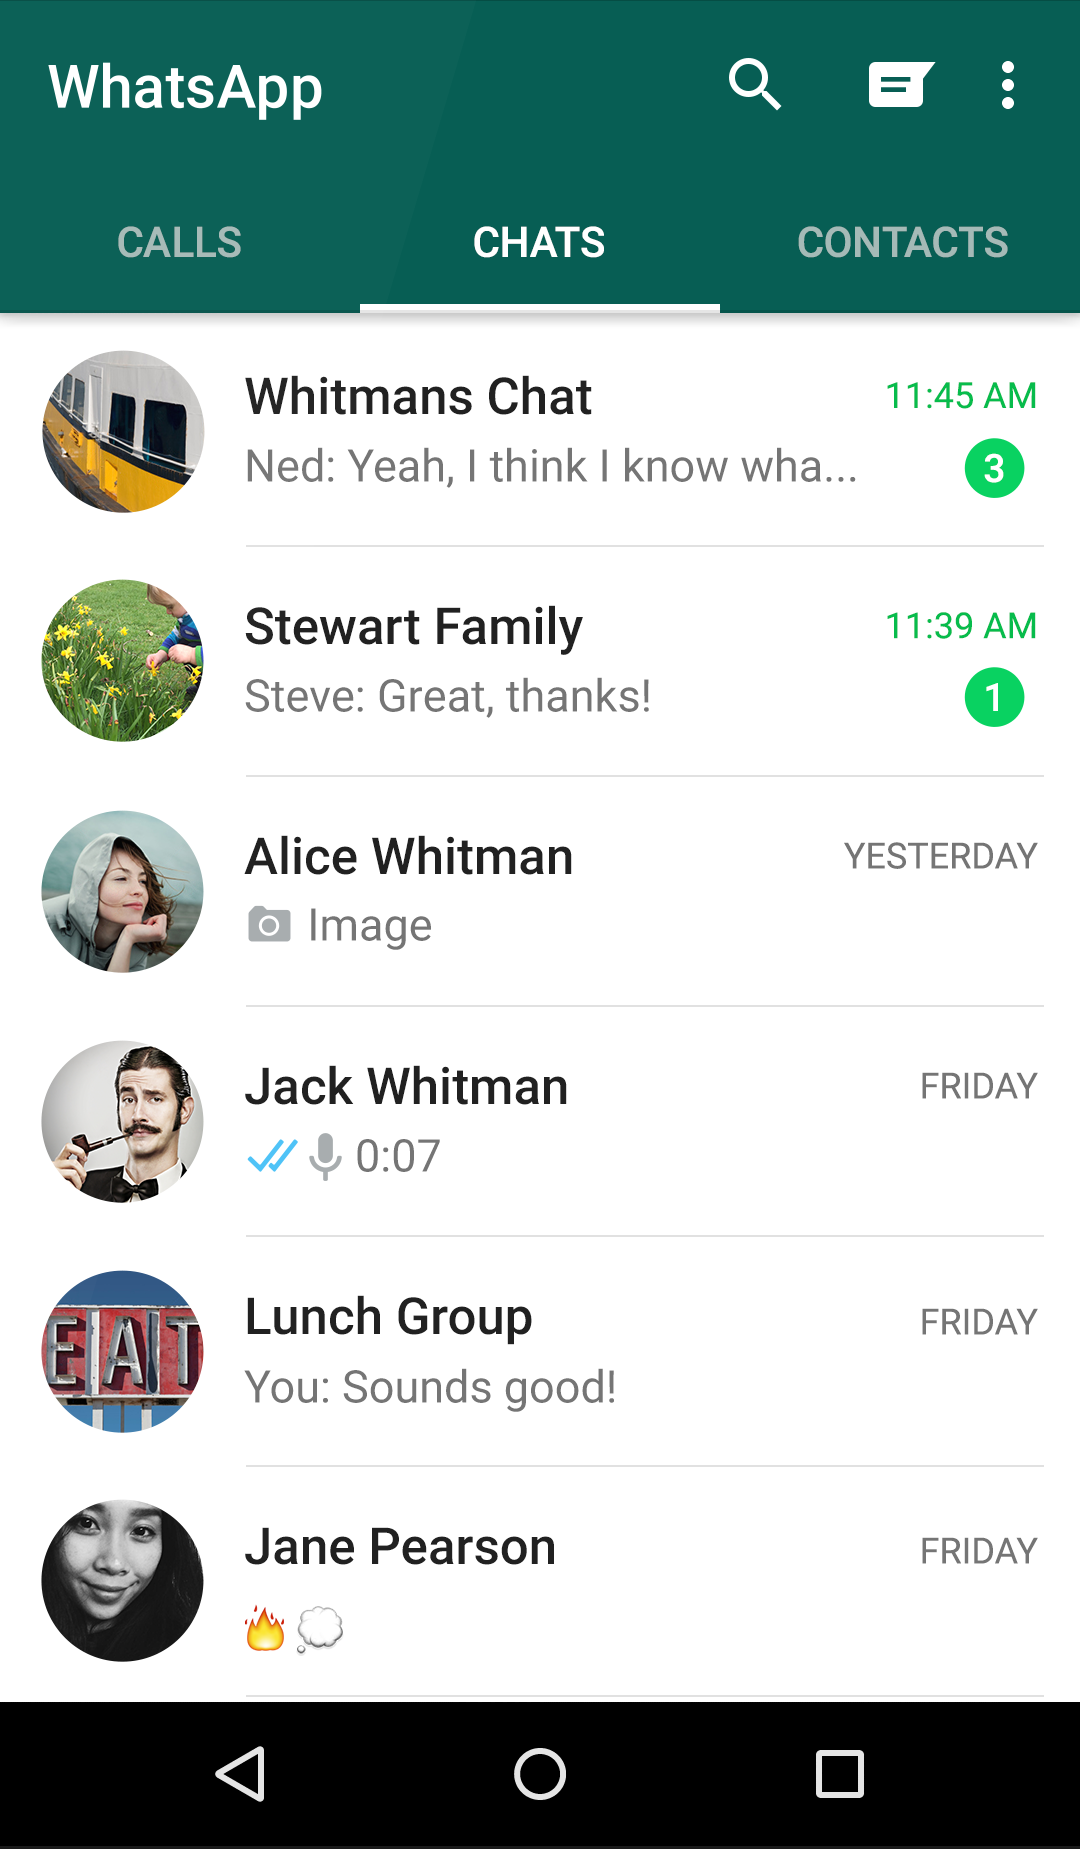 WhatsApp Messenger 2.17.1 free download - Software reviews ...